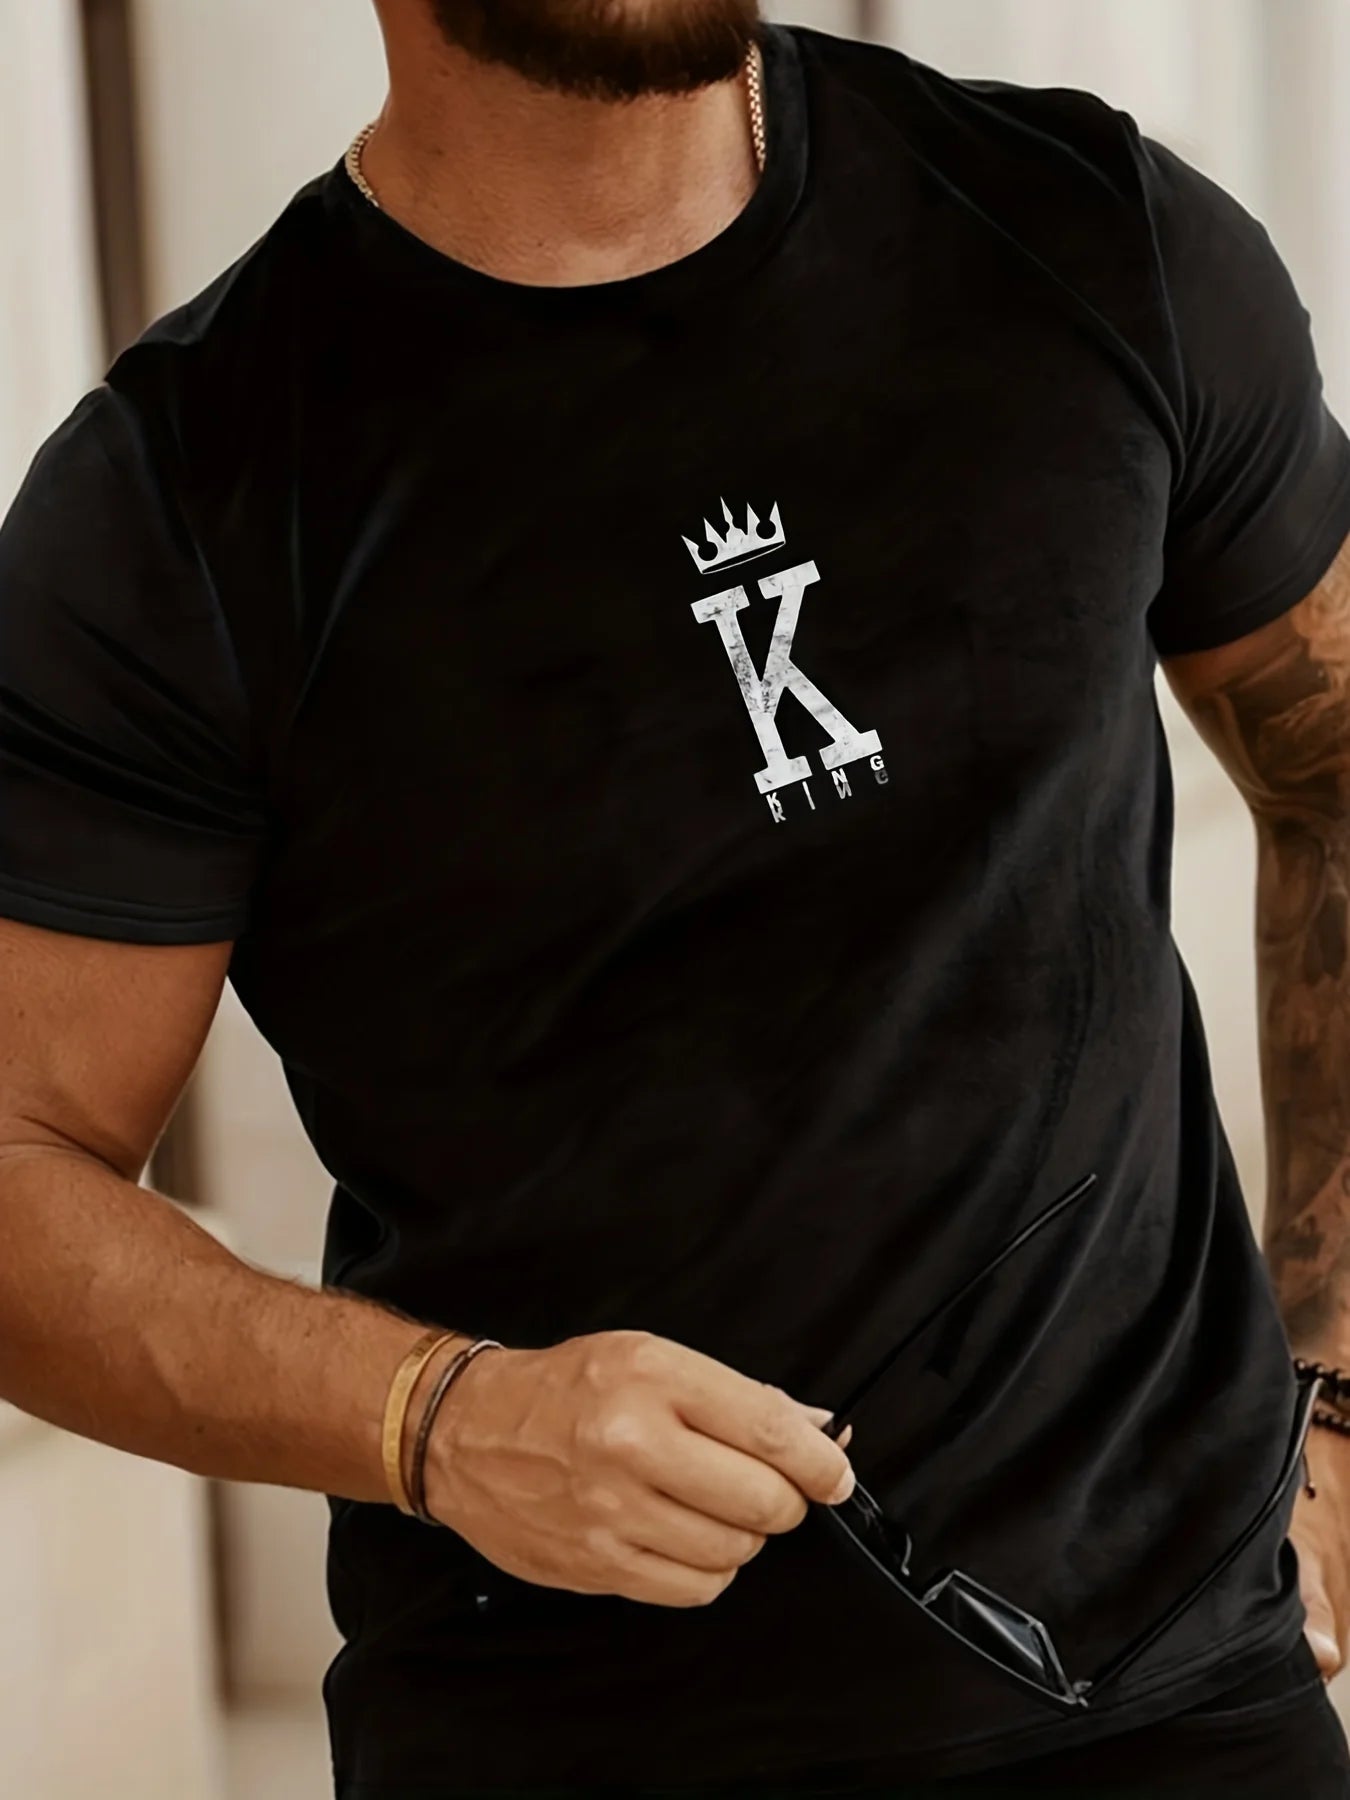 Men's Cotton Printed T-shirt Tops